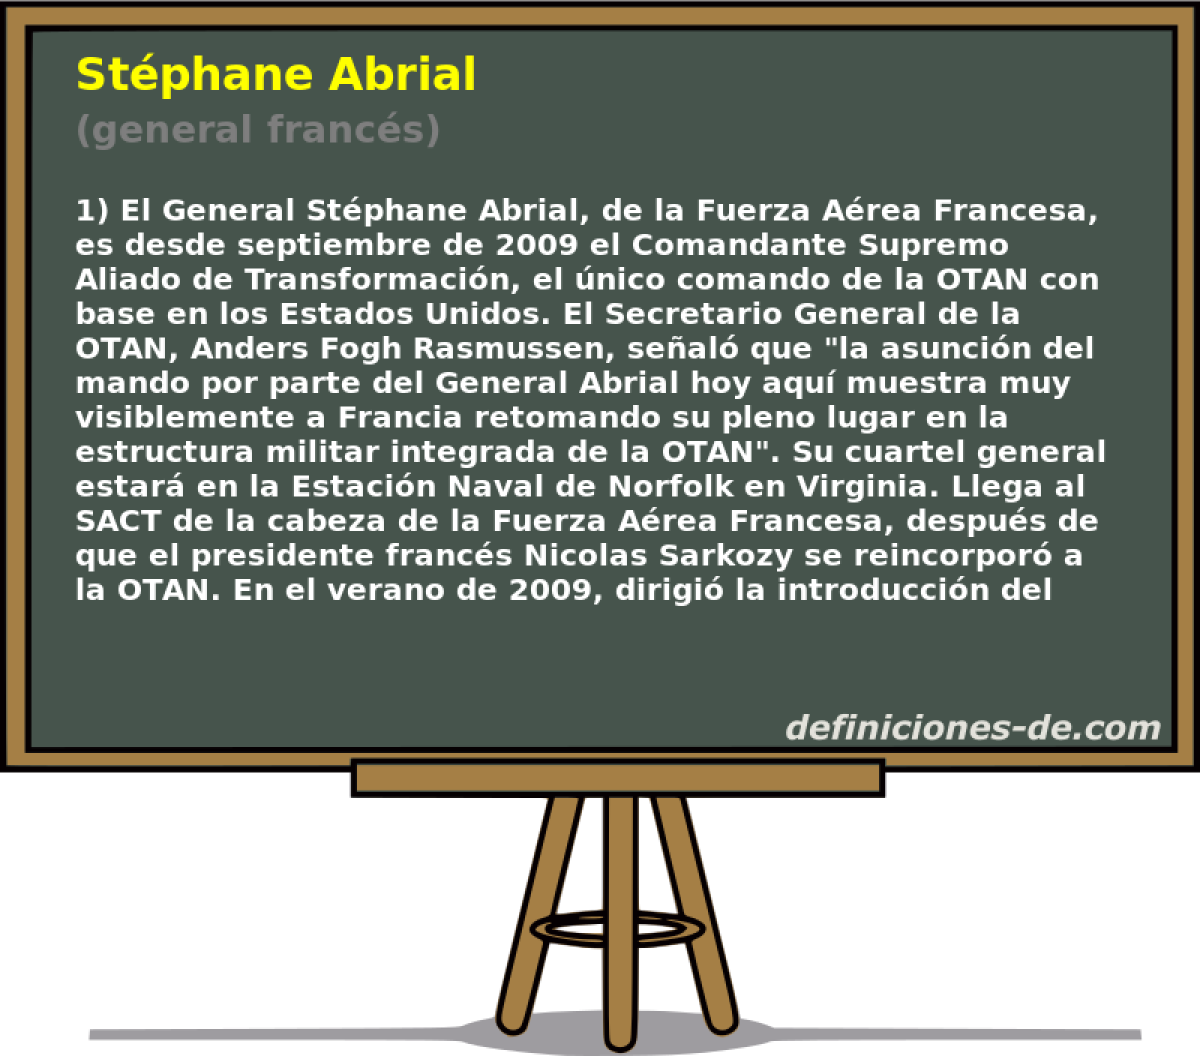 Stphane Abrial (general francs)